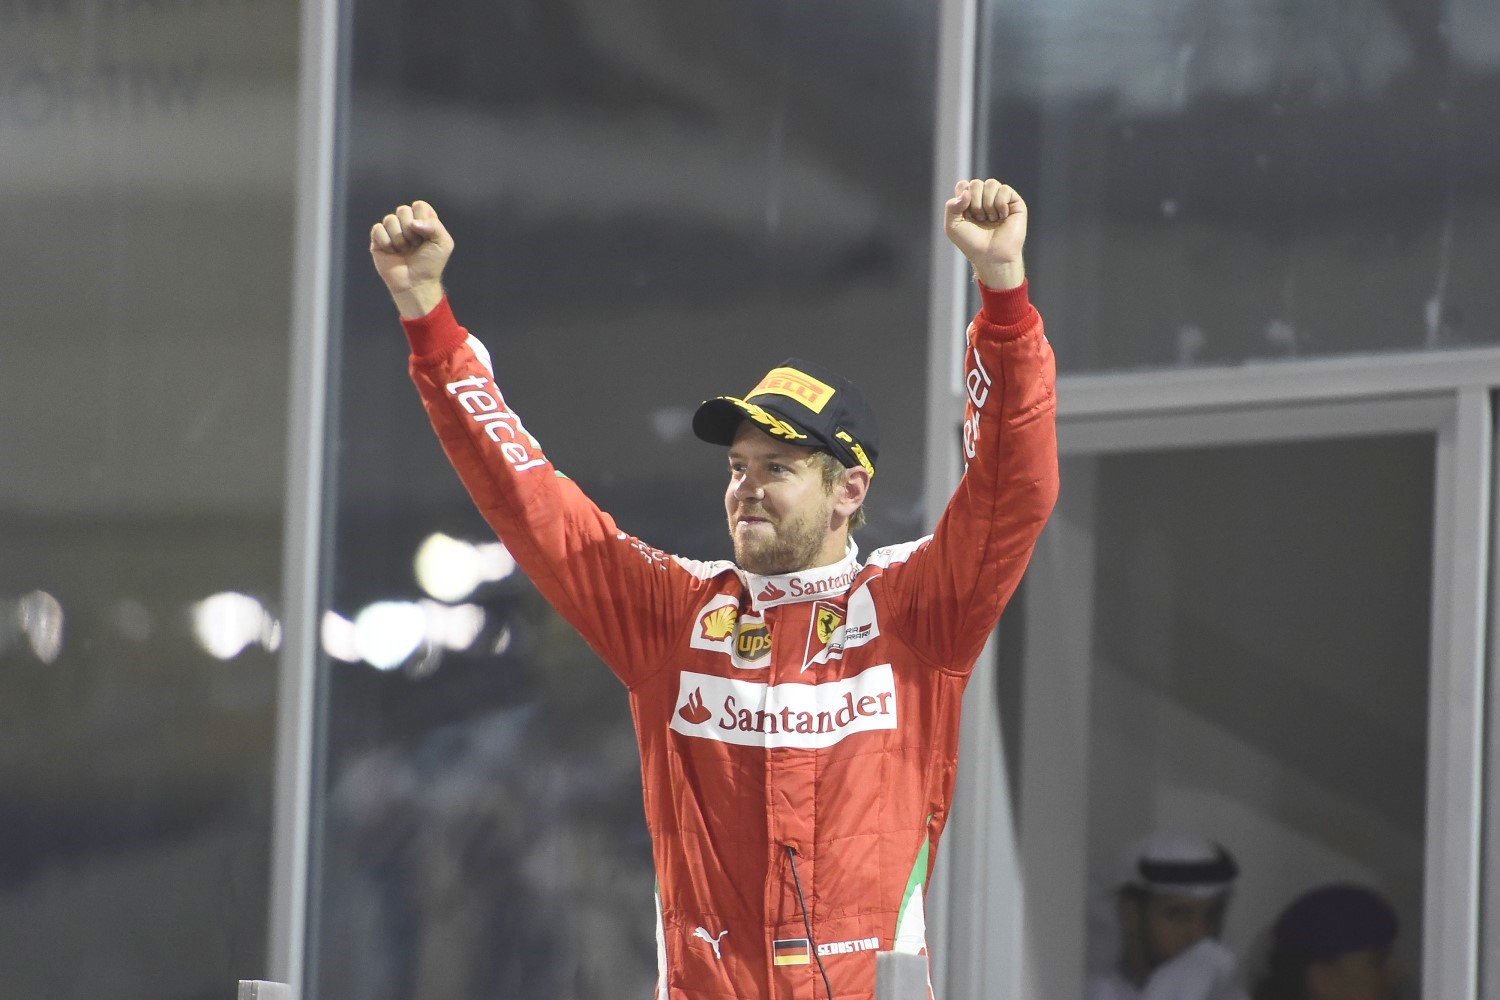 Vettel drove a great race in Abu Dhabi